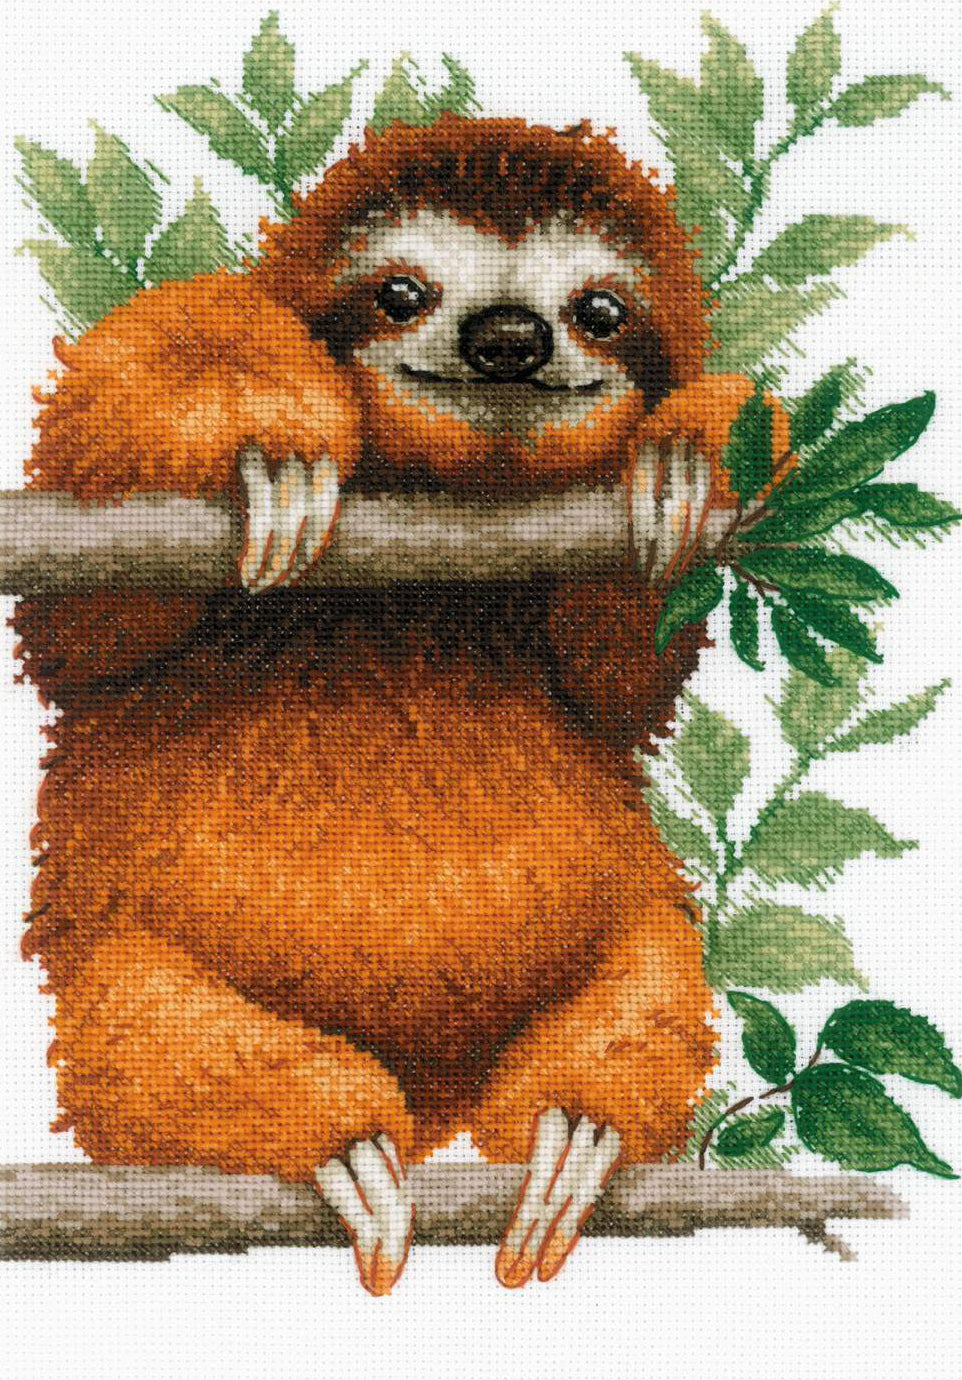 Cross Stitch Kit - "Tropical Sloth" - Riolis 2213